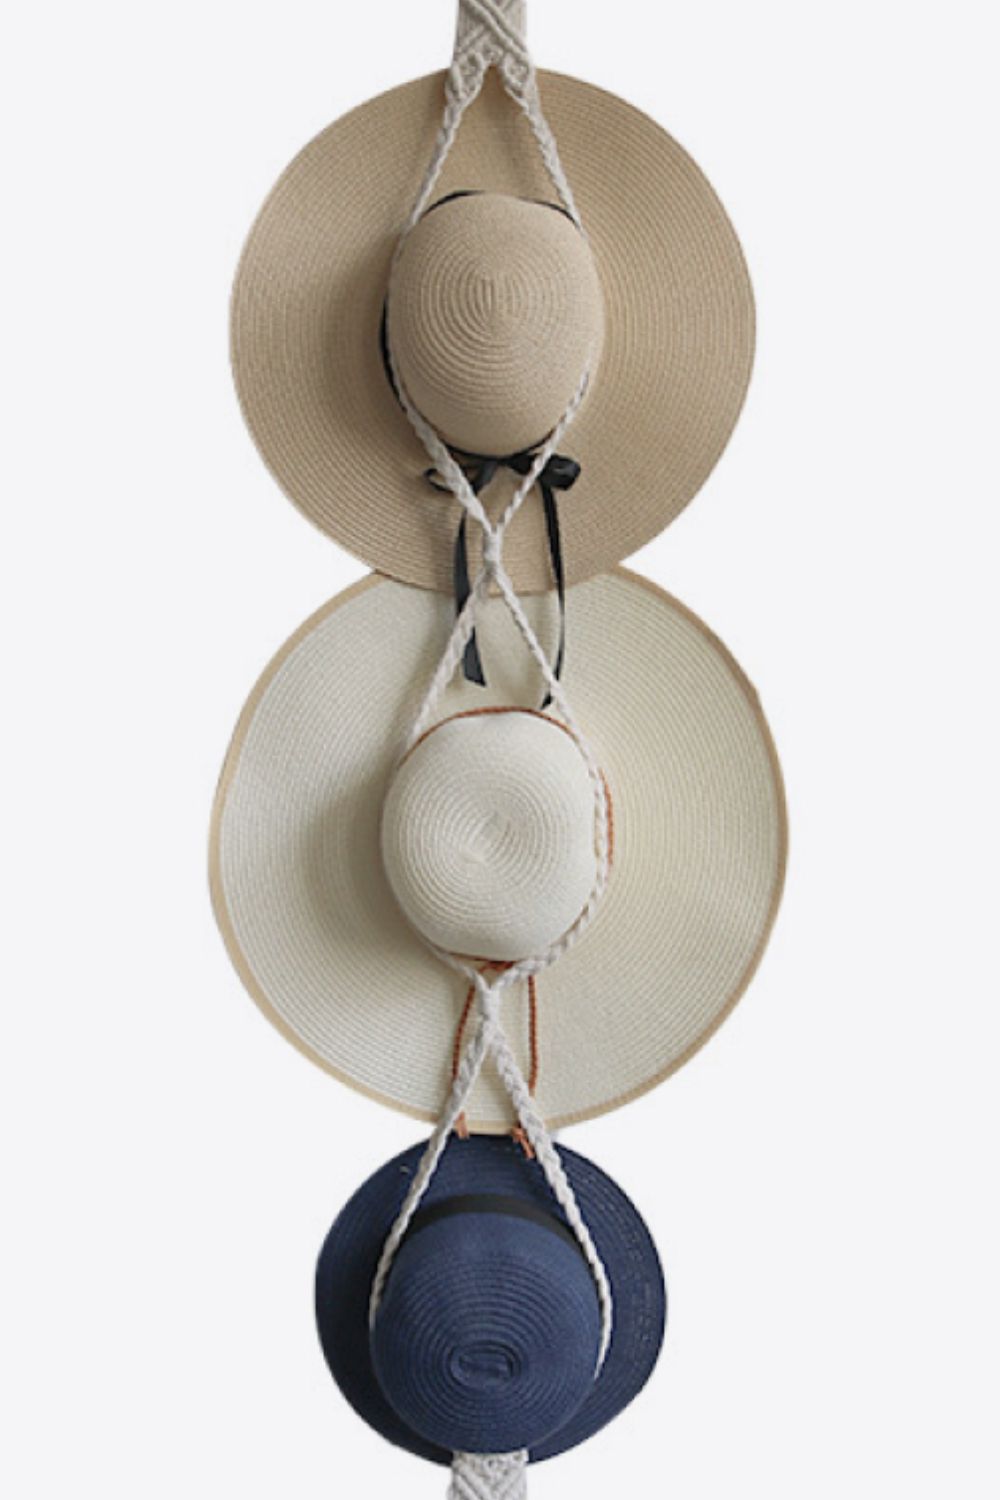 Hat Wall Hanger - Triple Hat – The Hat Store